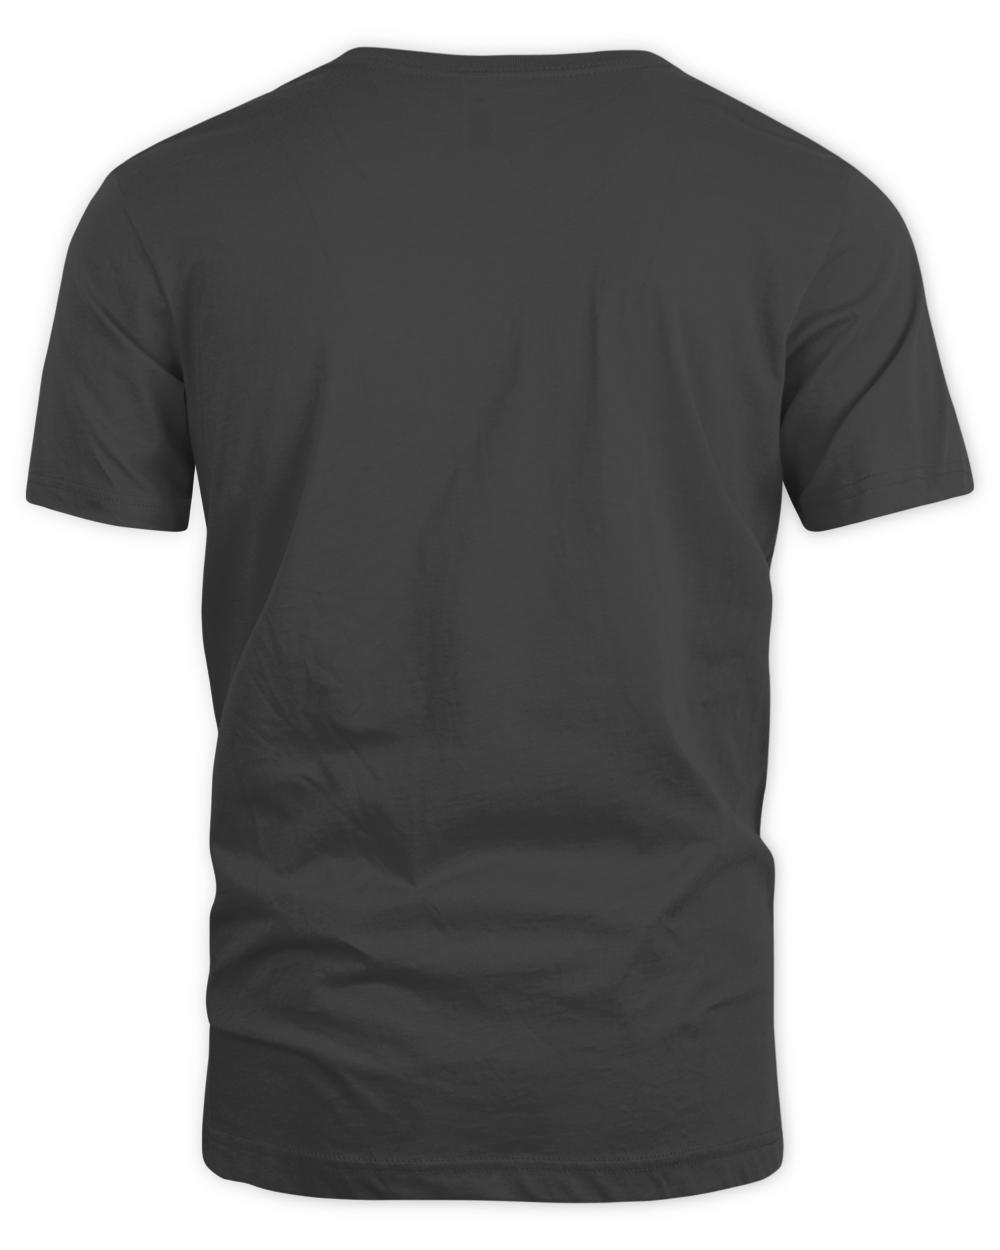 Gift Idea T-ShirtLegends were born in 1963 T-Shirt (3)